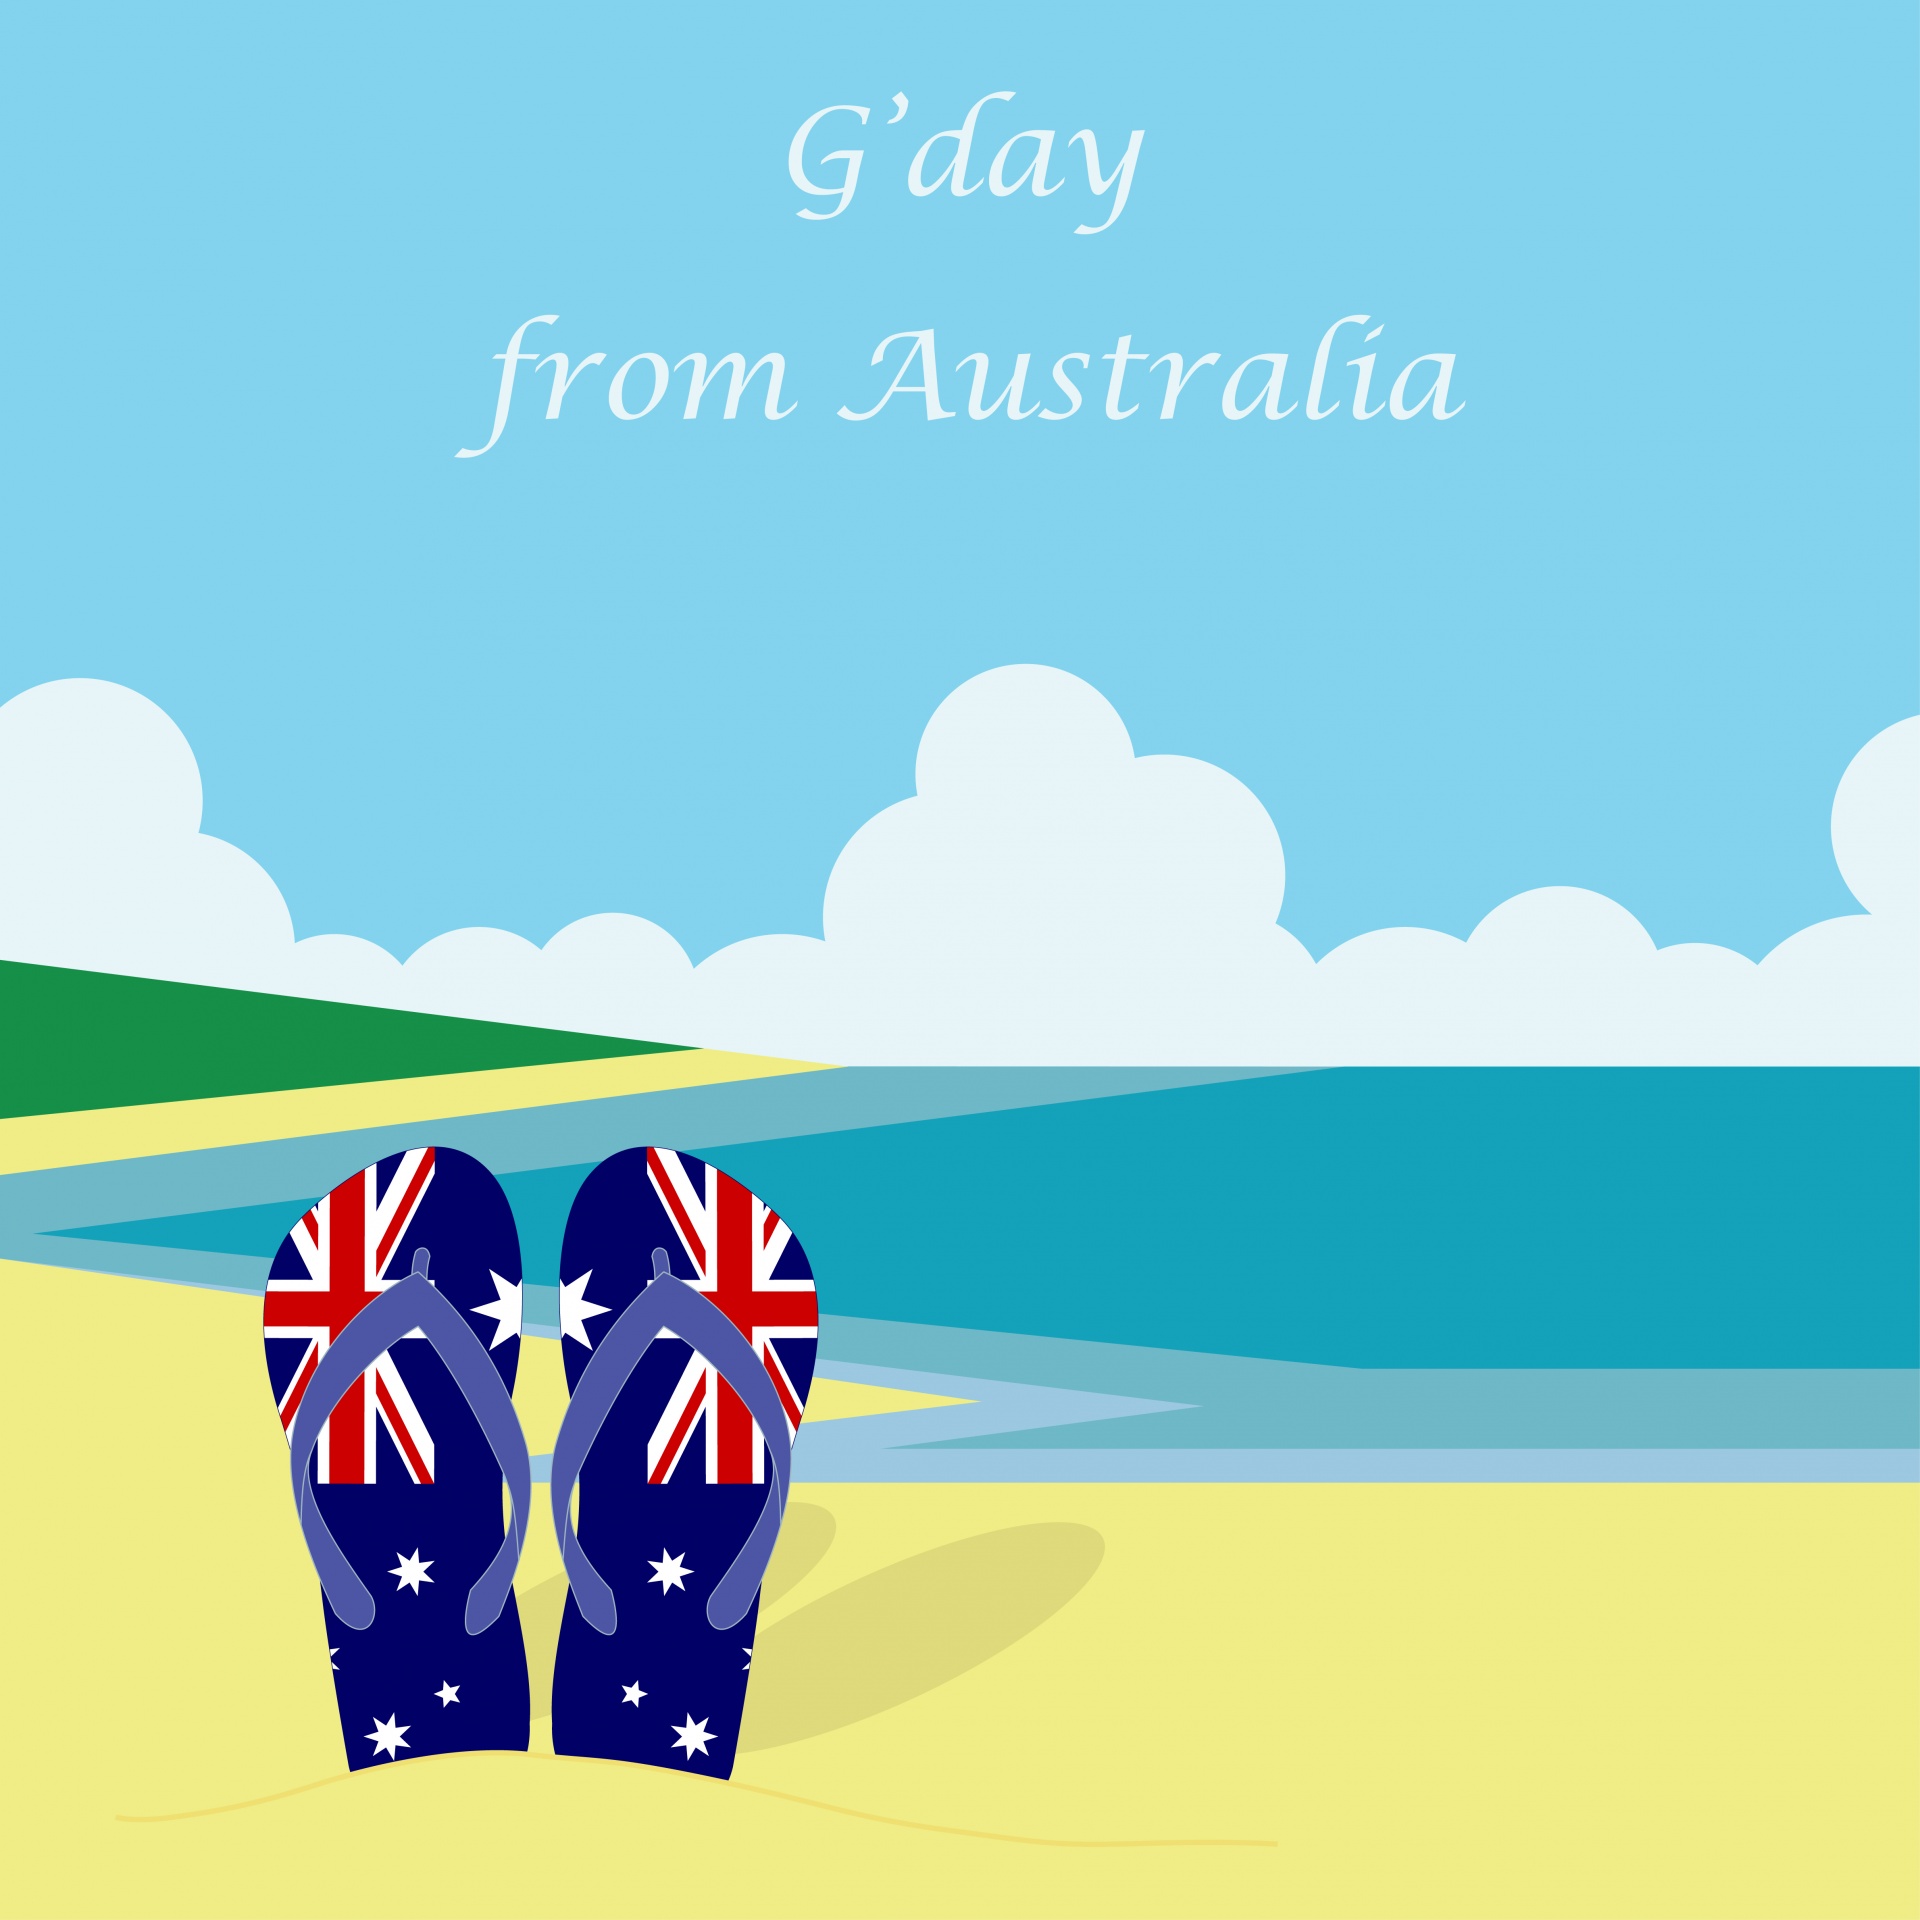 Flip flops, thongs decorated with Australian flag on Bondi beach illustration, poster, print